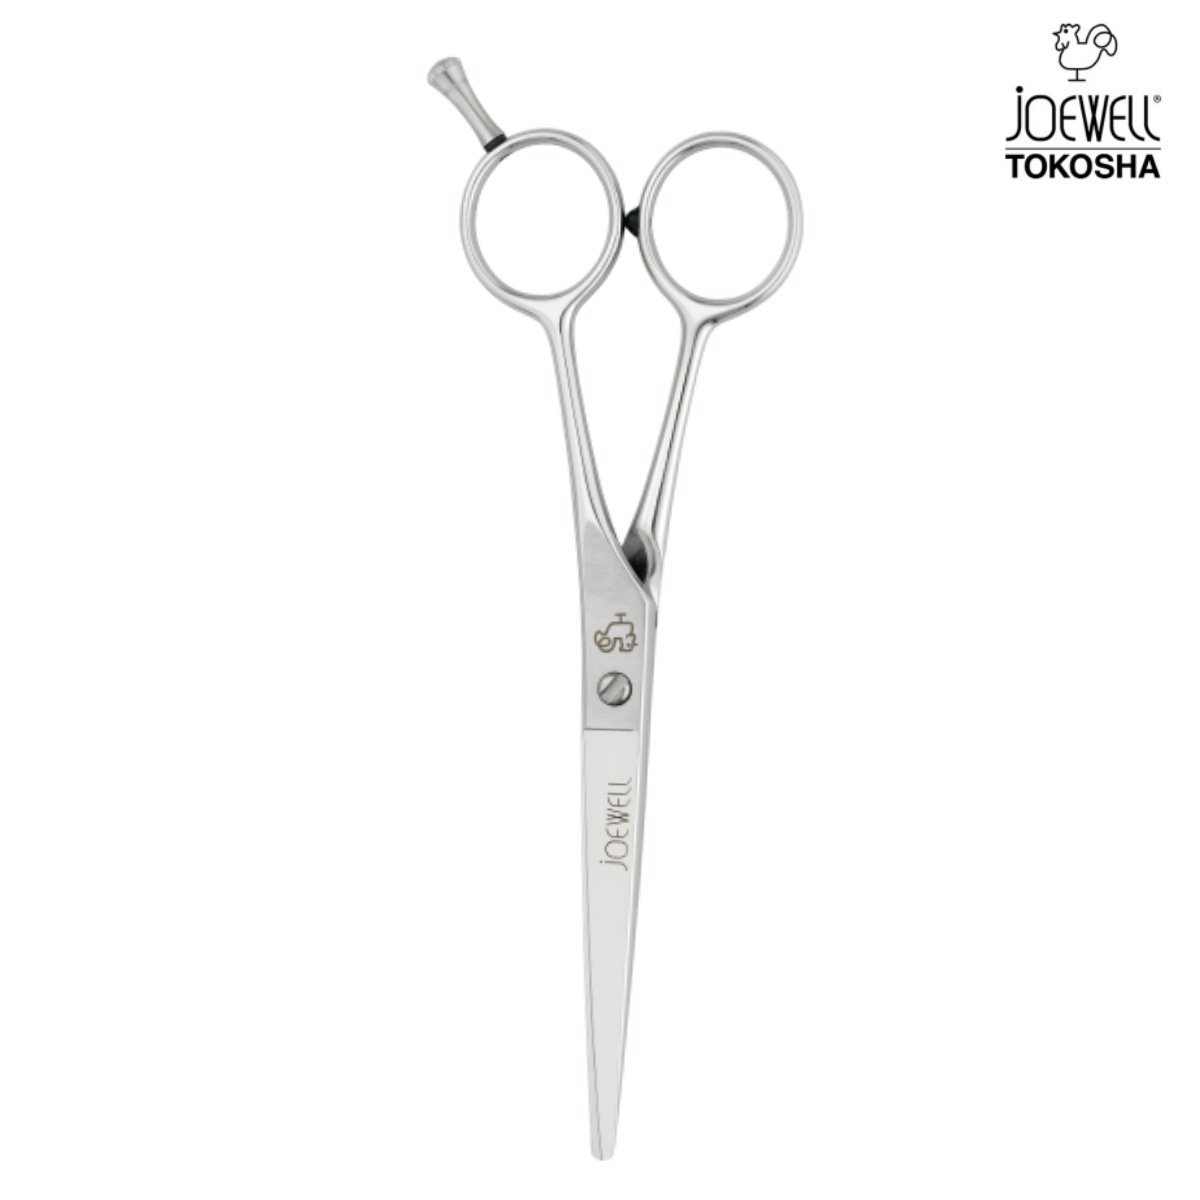 The Best Hair Scissors For Cutting Bangs - Scissor Tech Australia